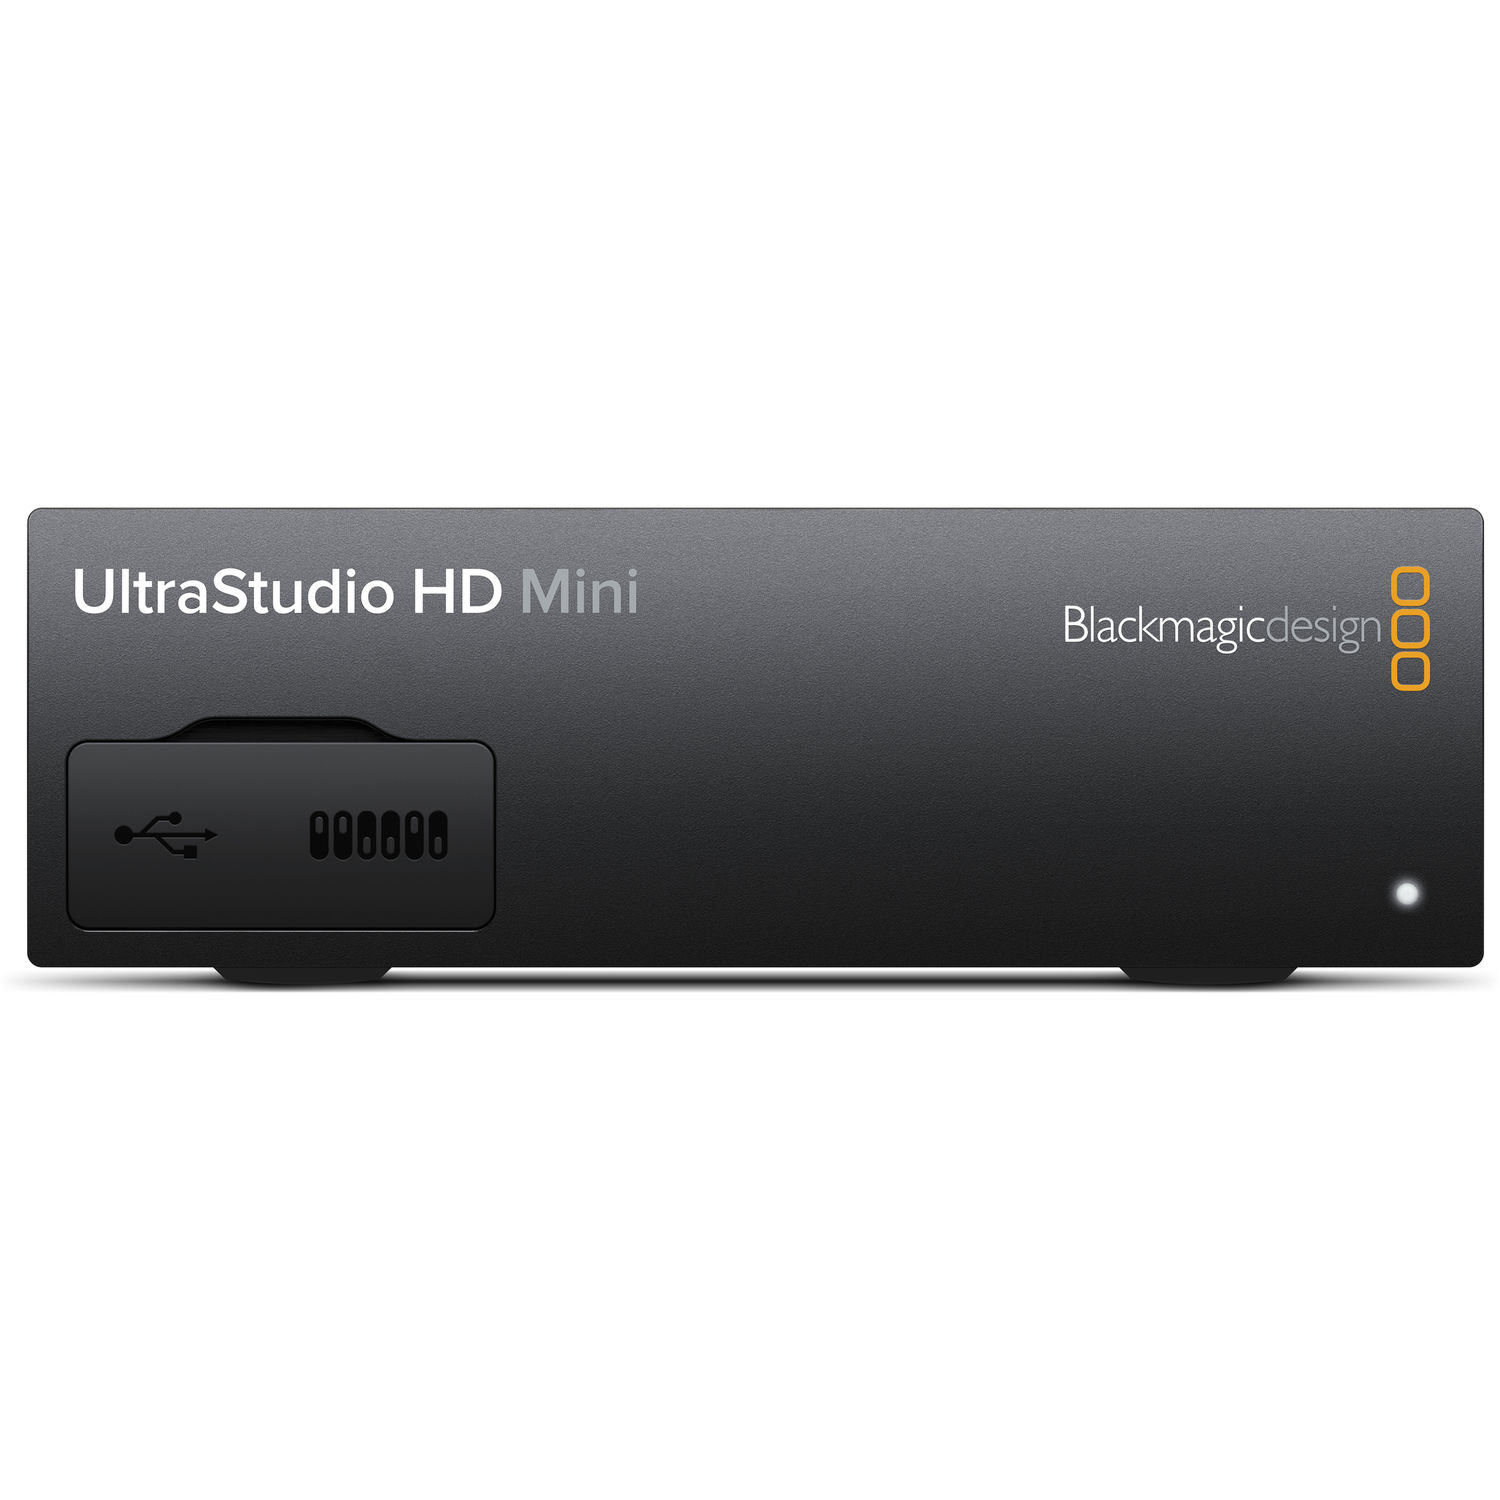  UltraStudio HD Mini -  כרטיס דגימה מבית Black Magic